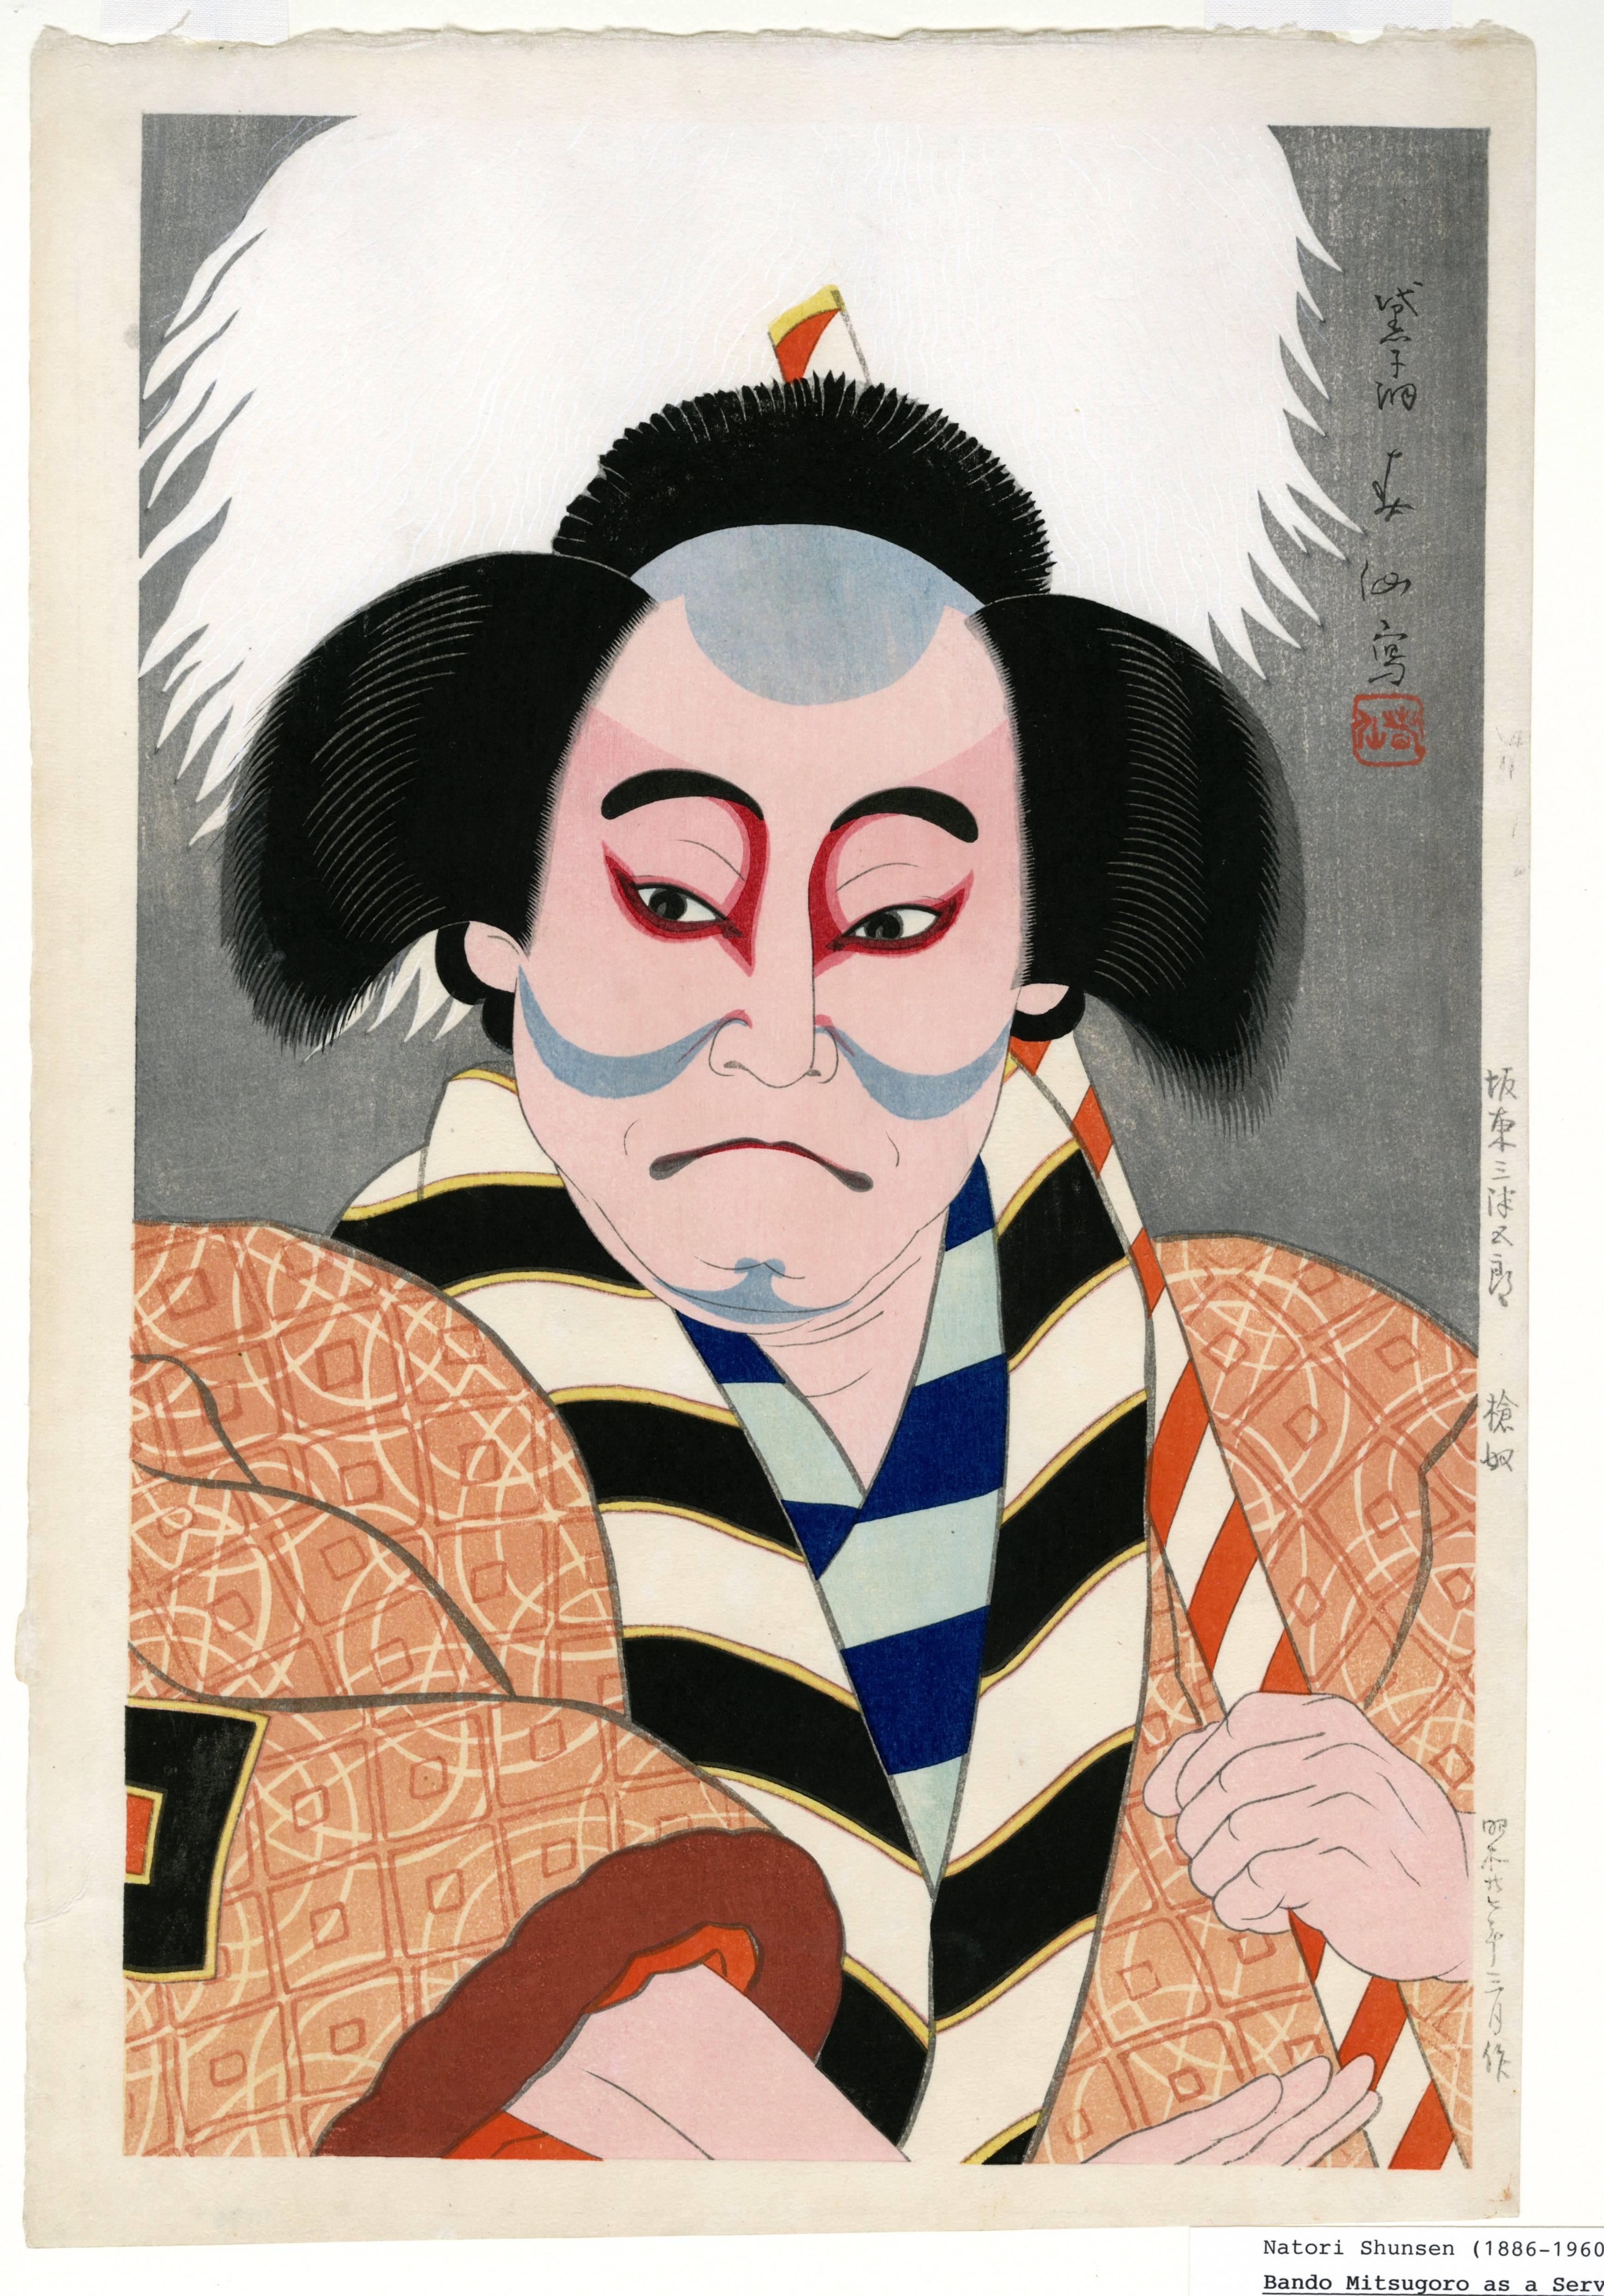 Natori Shunsen Portrait Print - Bando Mitsugoro as a Servant with a Sword